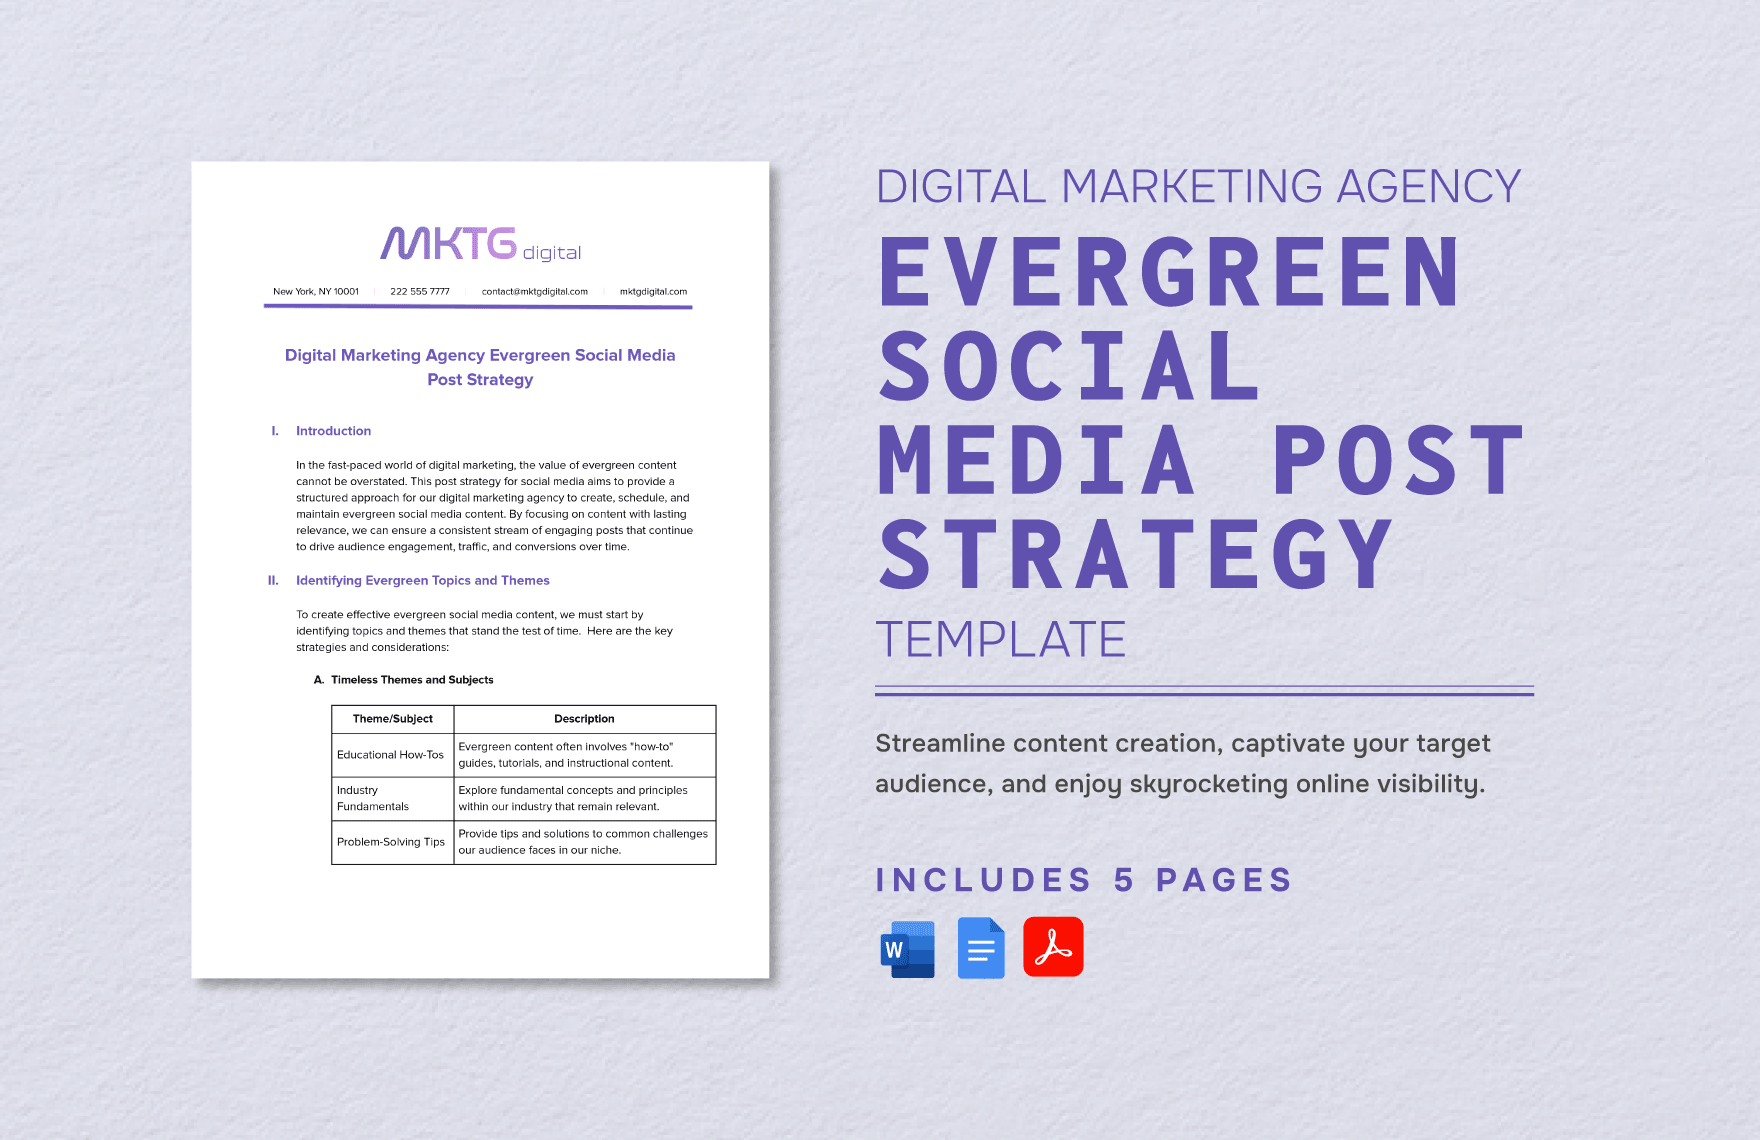 Digital Marketing Agency Evergreen Social Media Post Strategy Template in Word, Google Docs, PDF